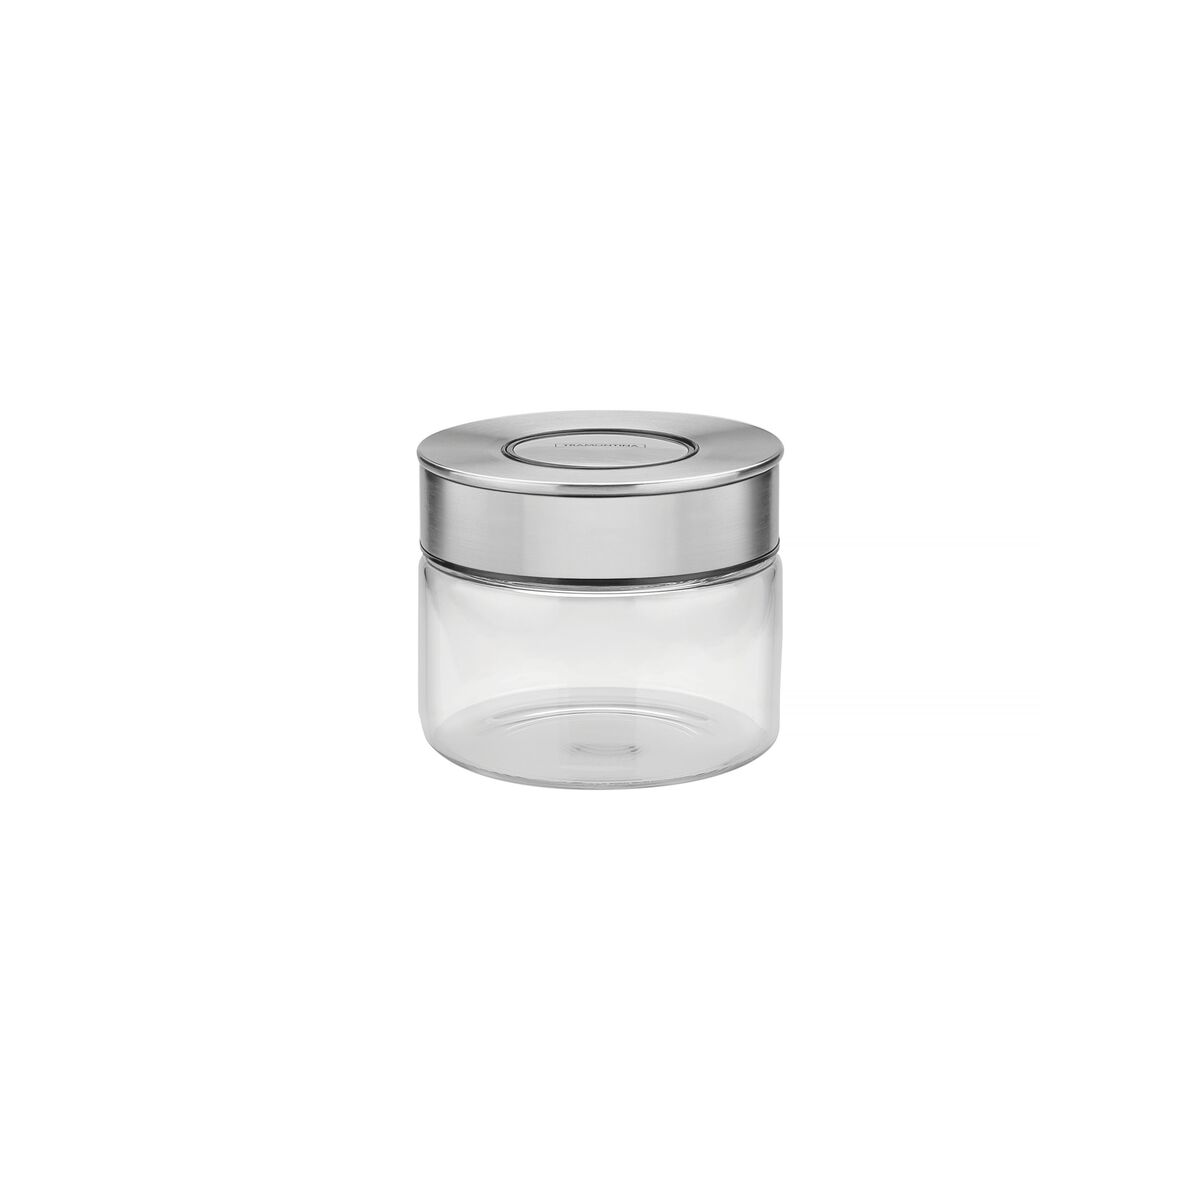 Tramontina Purezza glass jar with stainless steel lid, 0.4 L